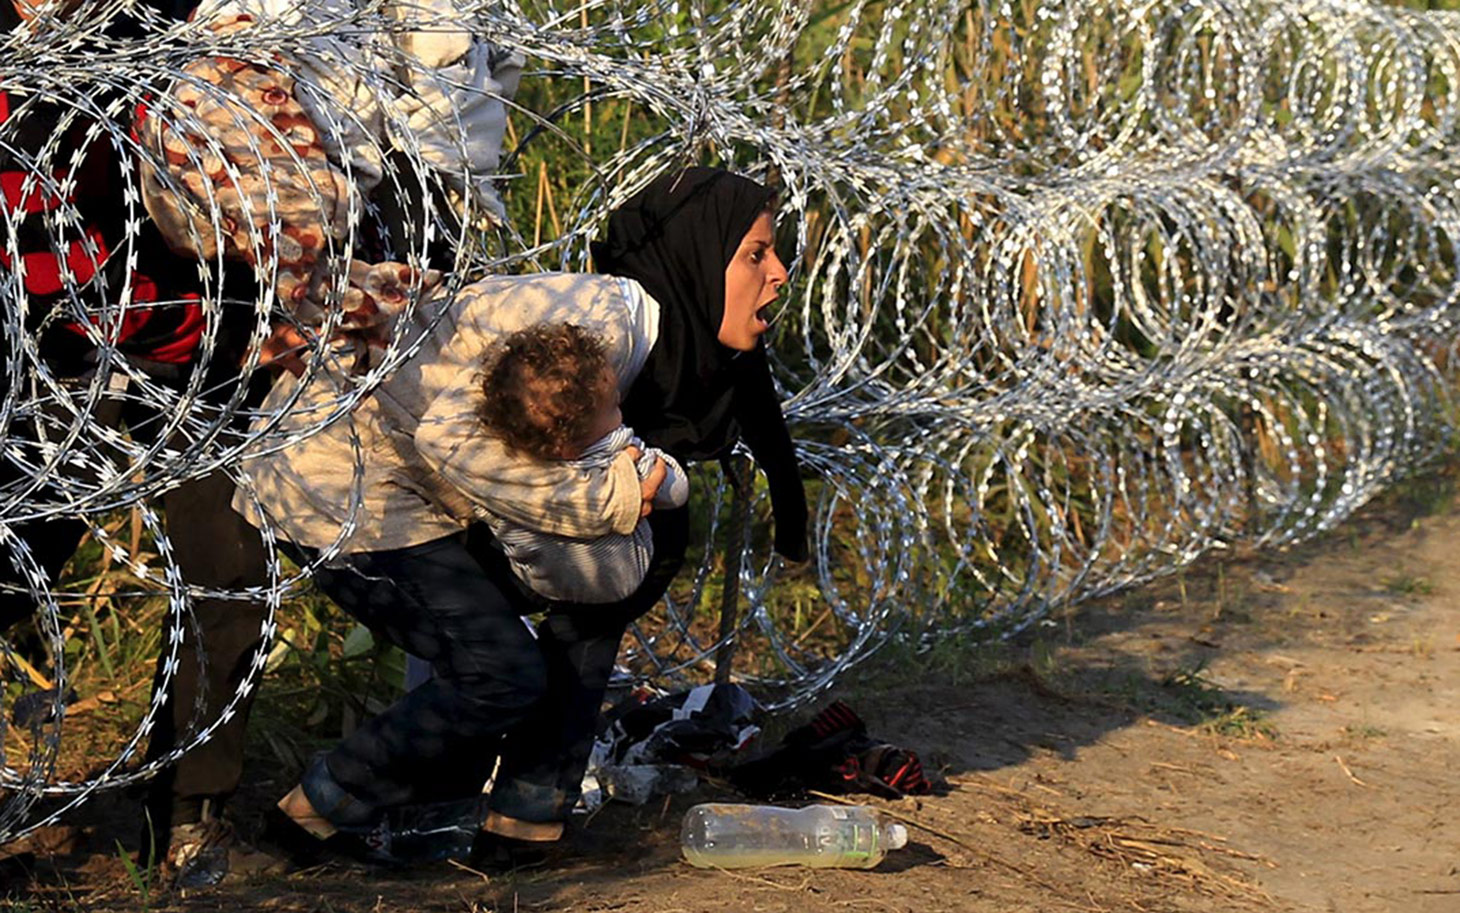 Syrian and Afghan migrants in Croatia break out in 